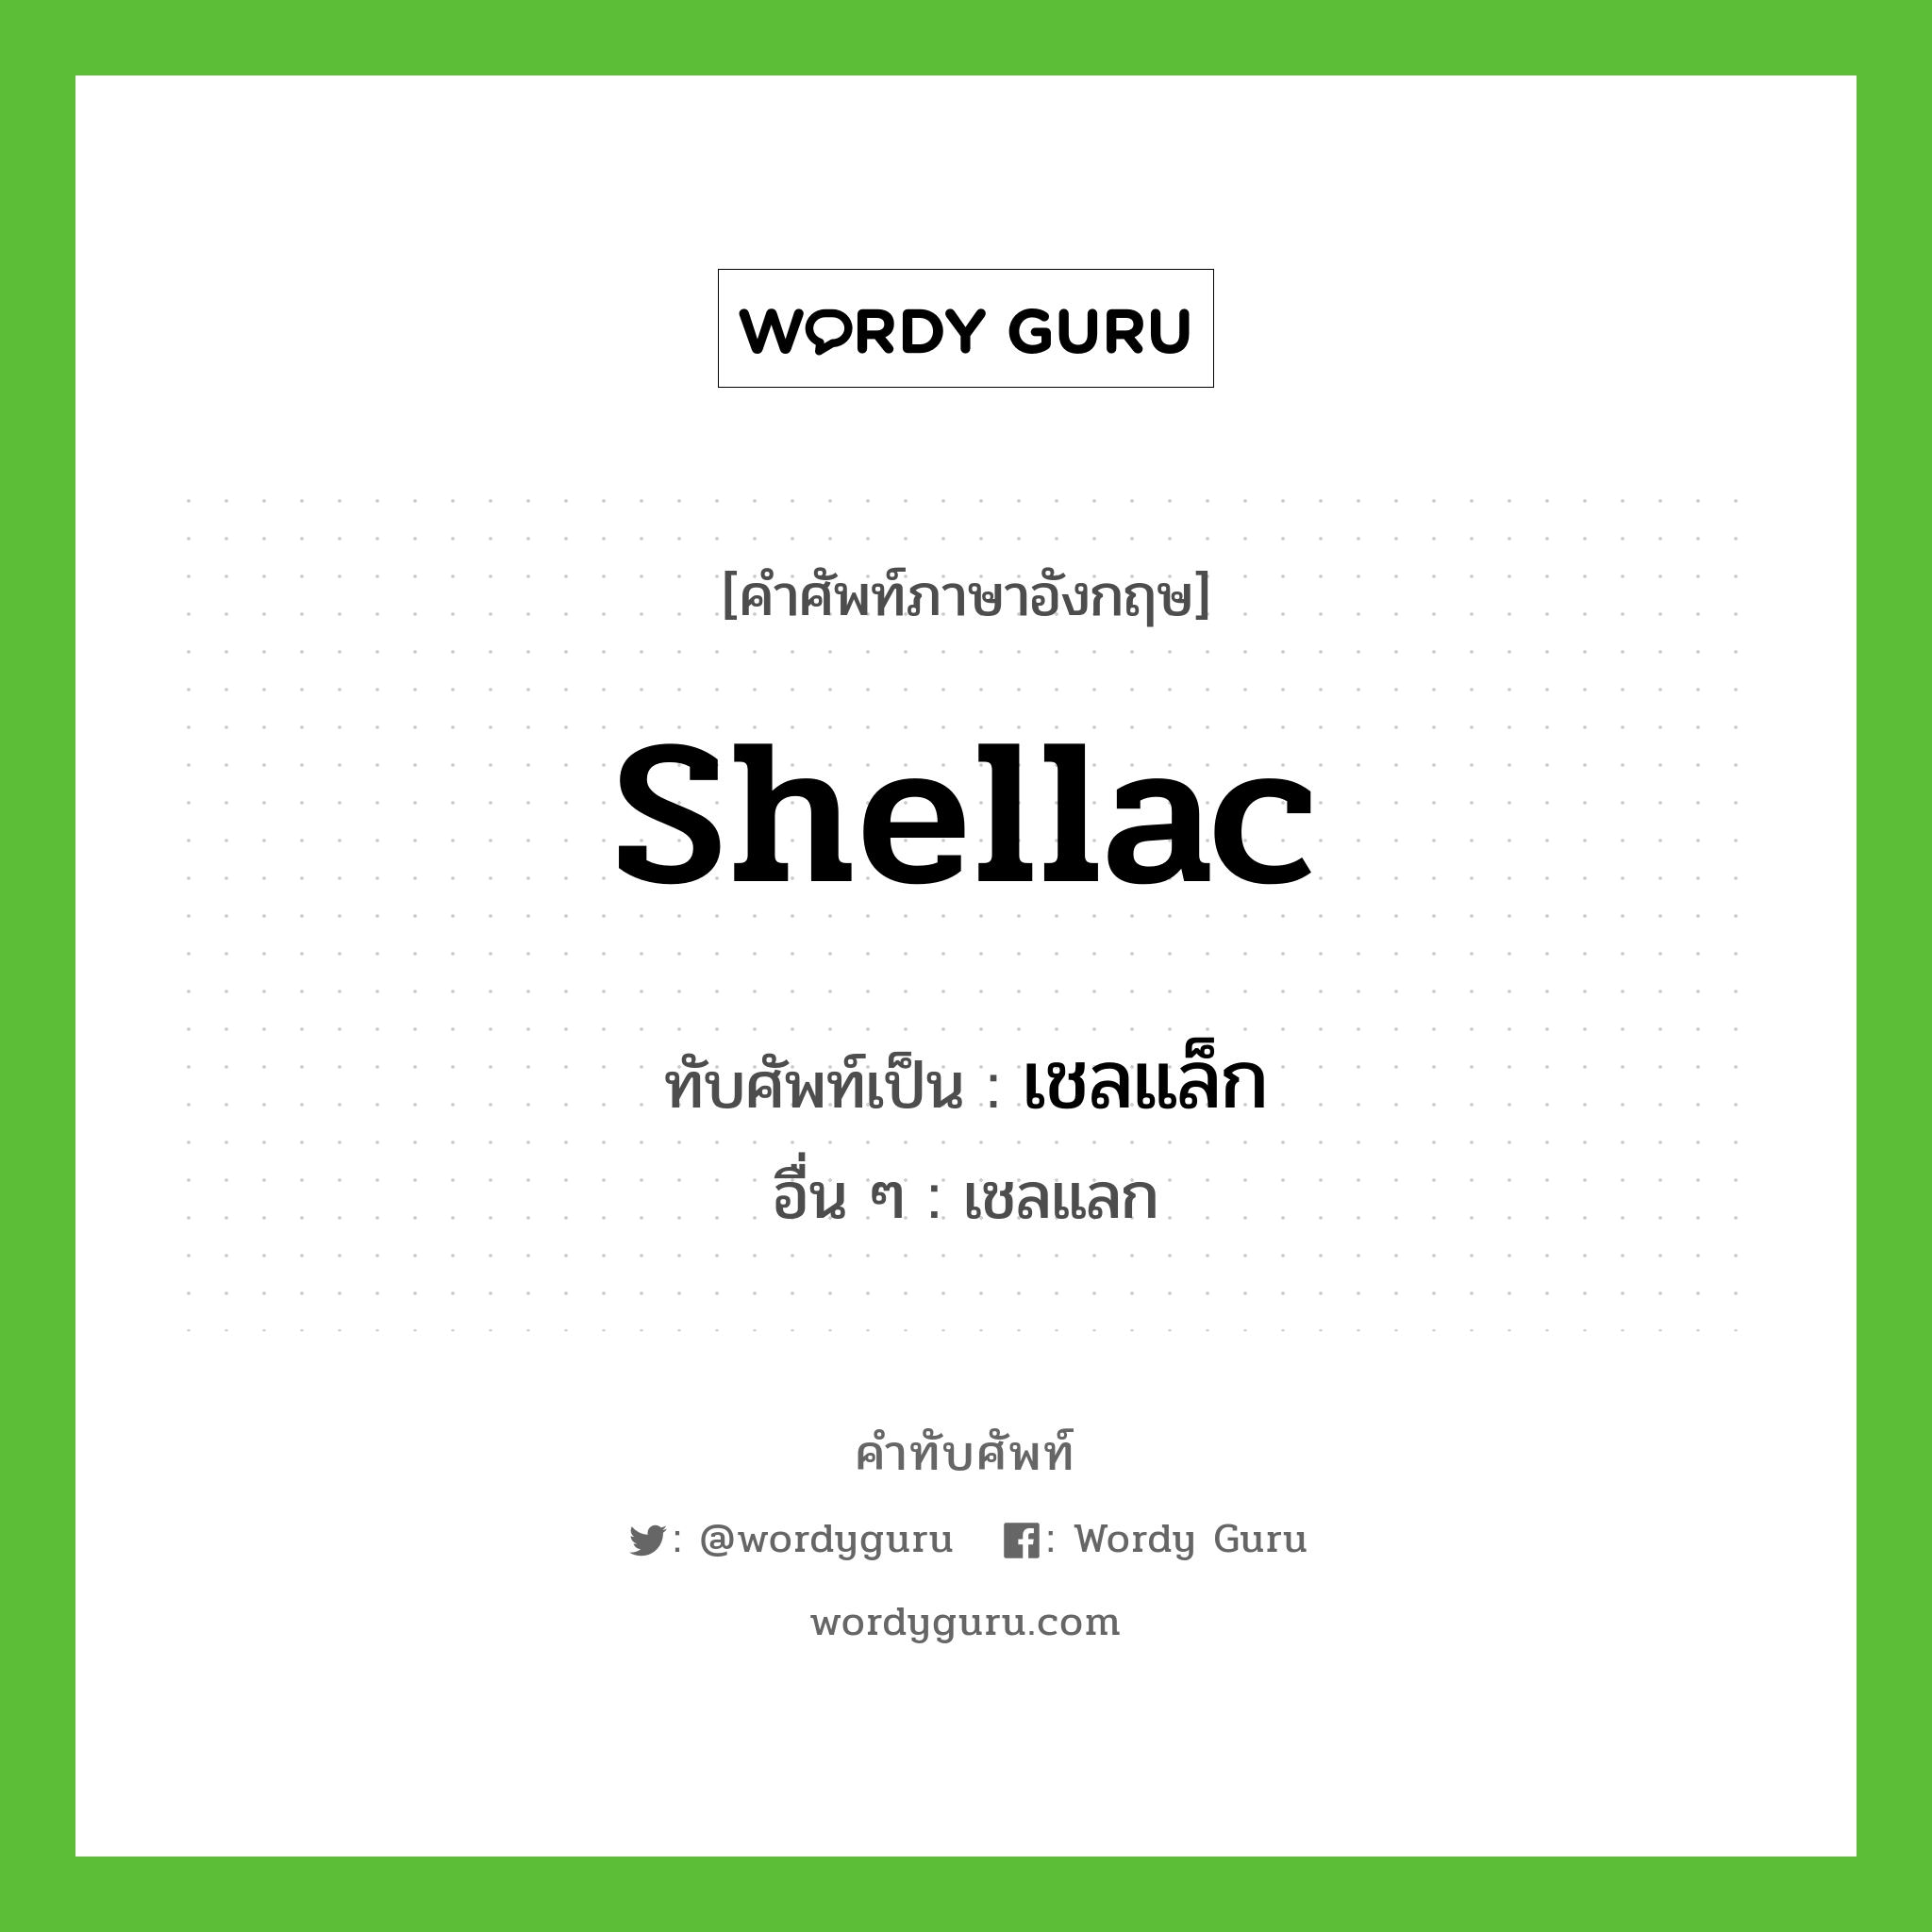 shellac เขียนเป็นคำไทยว่าอะไร?, คำศัพท์ภาษาอังกฤษ shellac ทับศัพท์เป็น เชลแล็ก อื่น ๆ เชลแลก